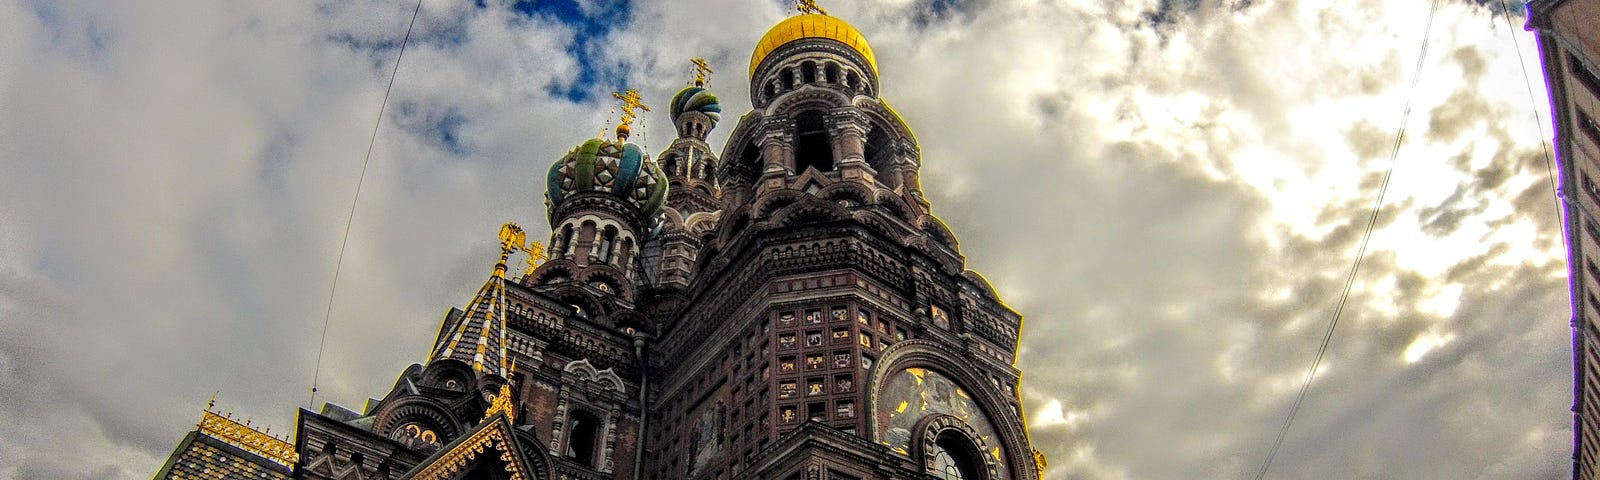 Chiesa del Salvatore sul Sangue Versato, San Pietroburgo